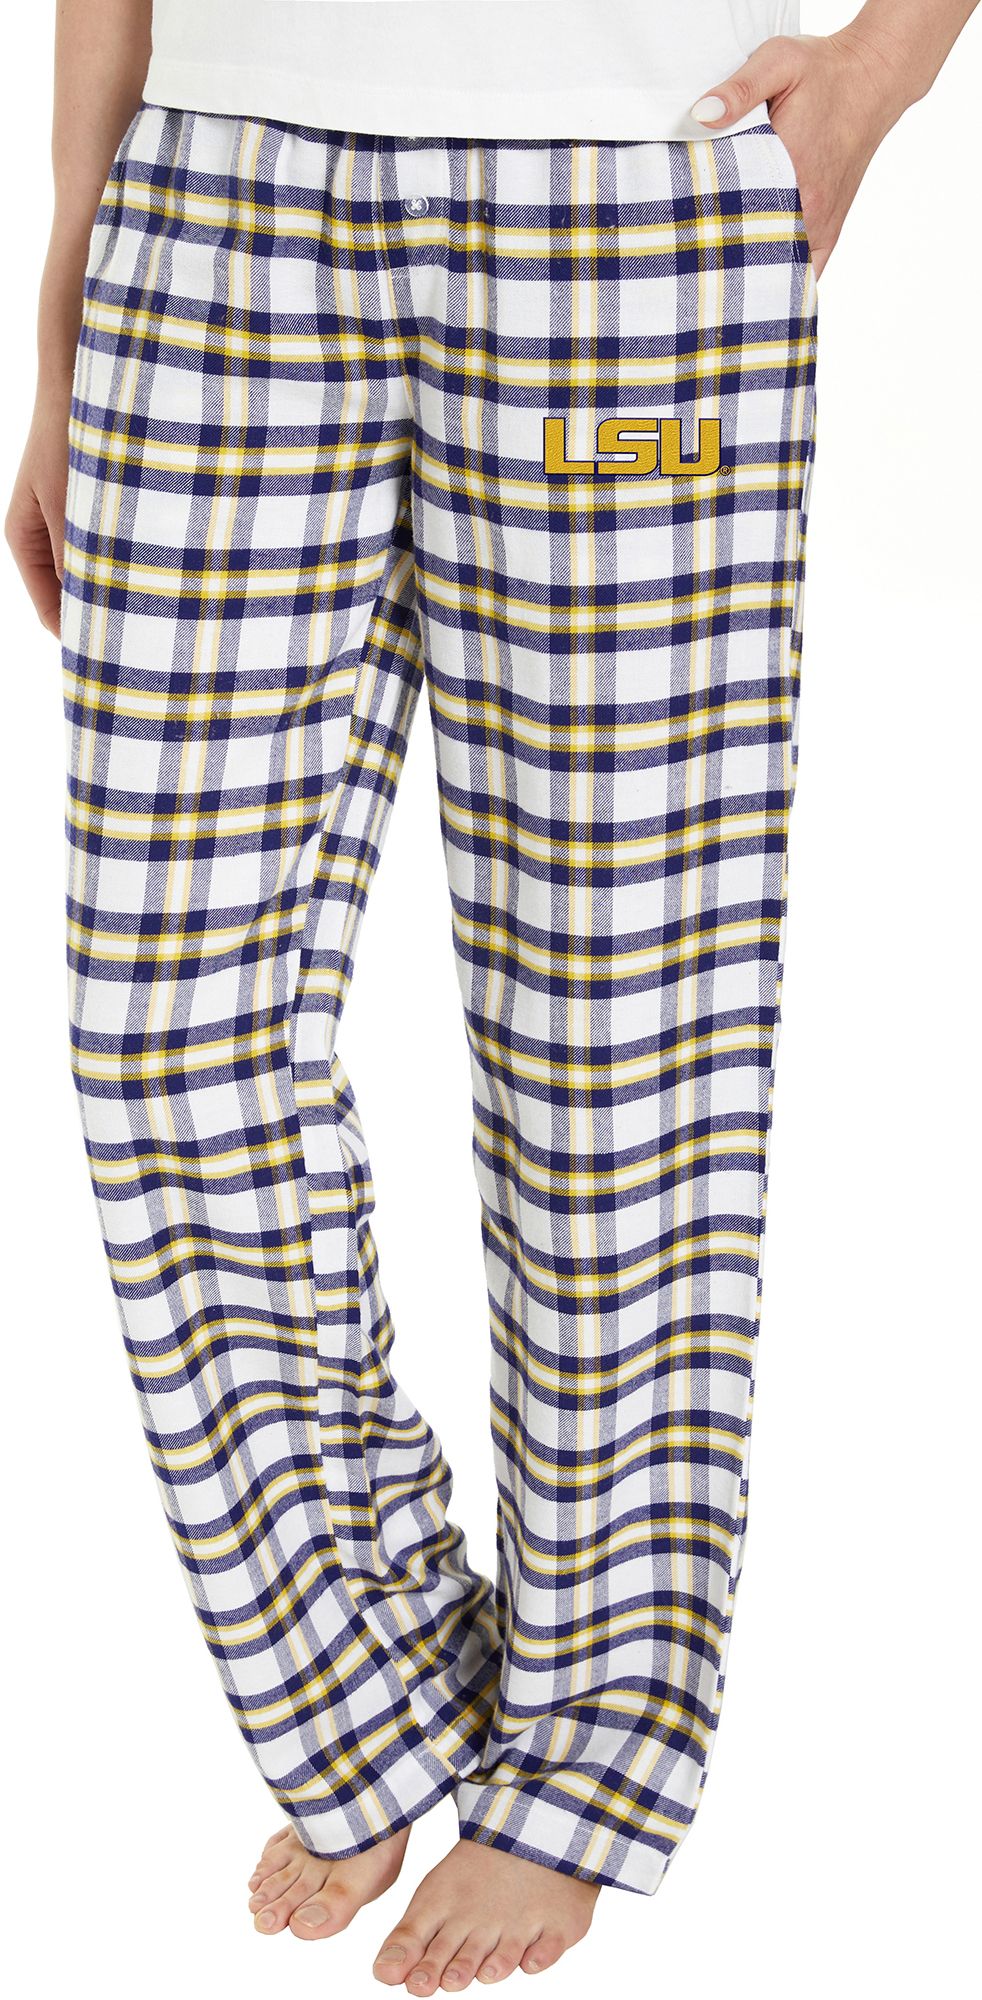 LSU, LSU College Concepts Women's Sienna Flannel Pants